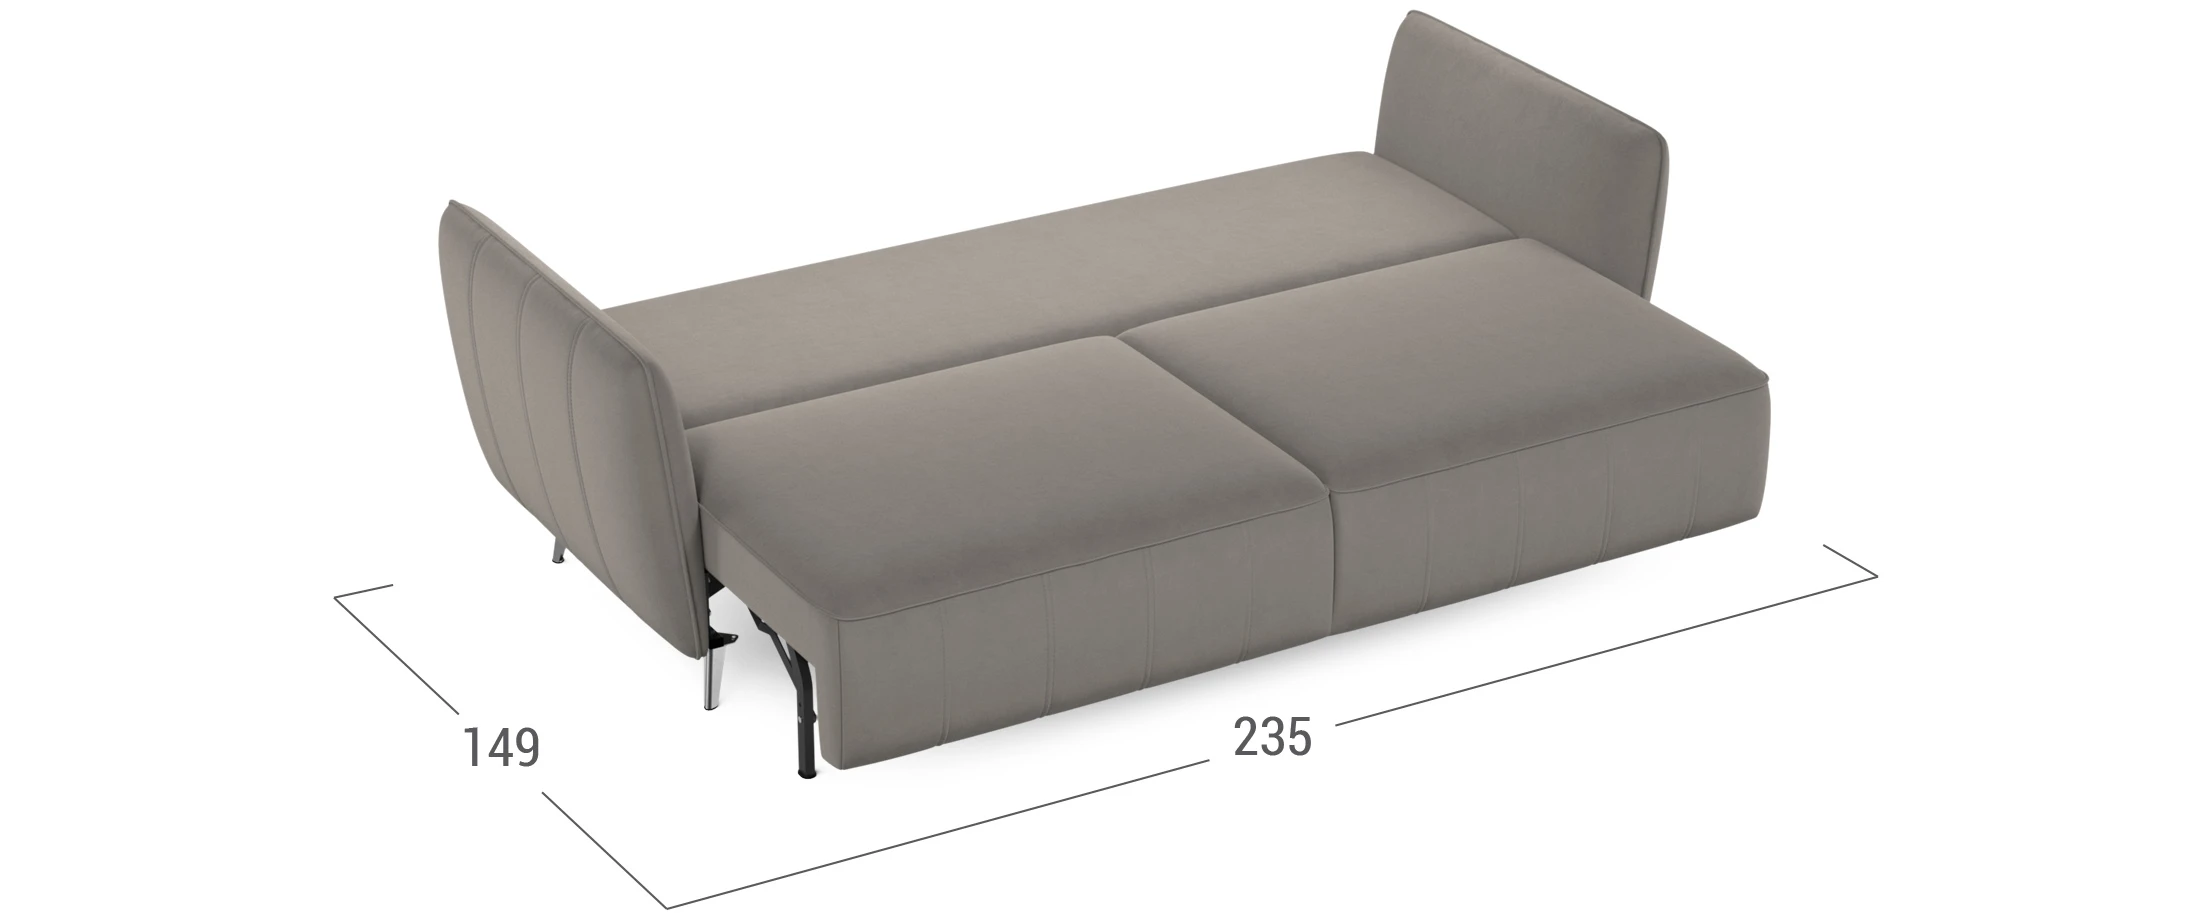 ширина дивана в разложенном виде